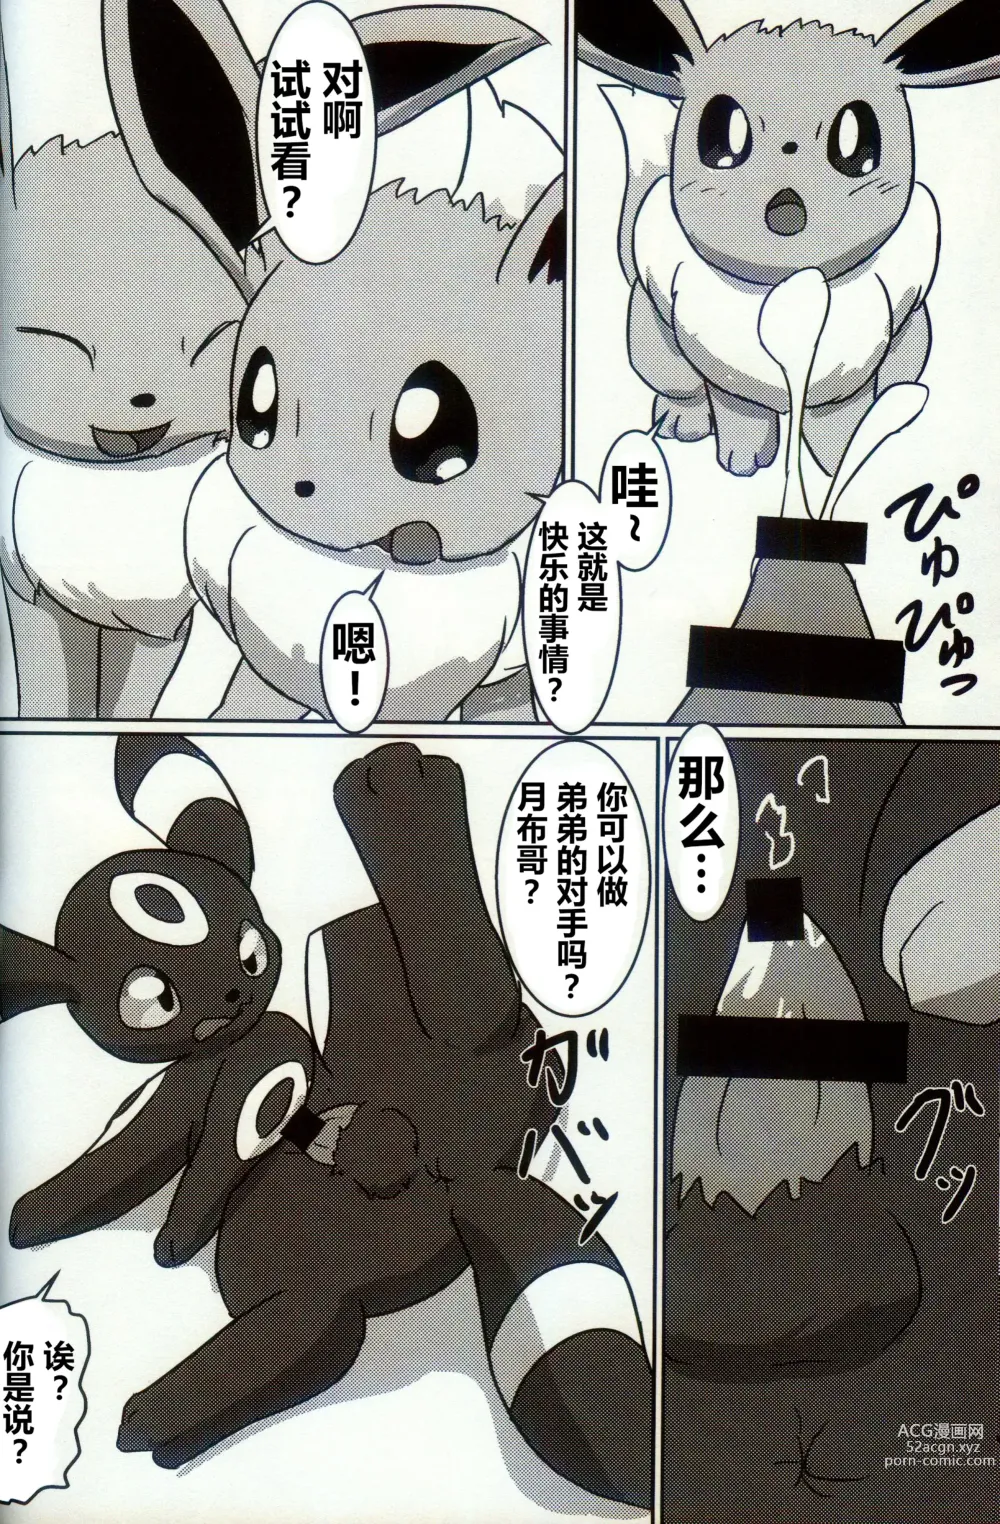 Page 12 of doujinshi 被拜托照顾附近的双胞胎发生了不得了的事...